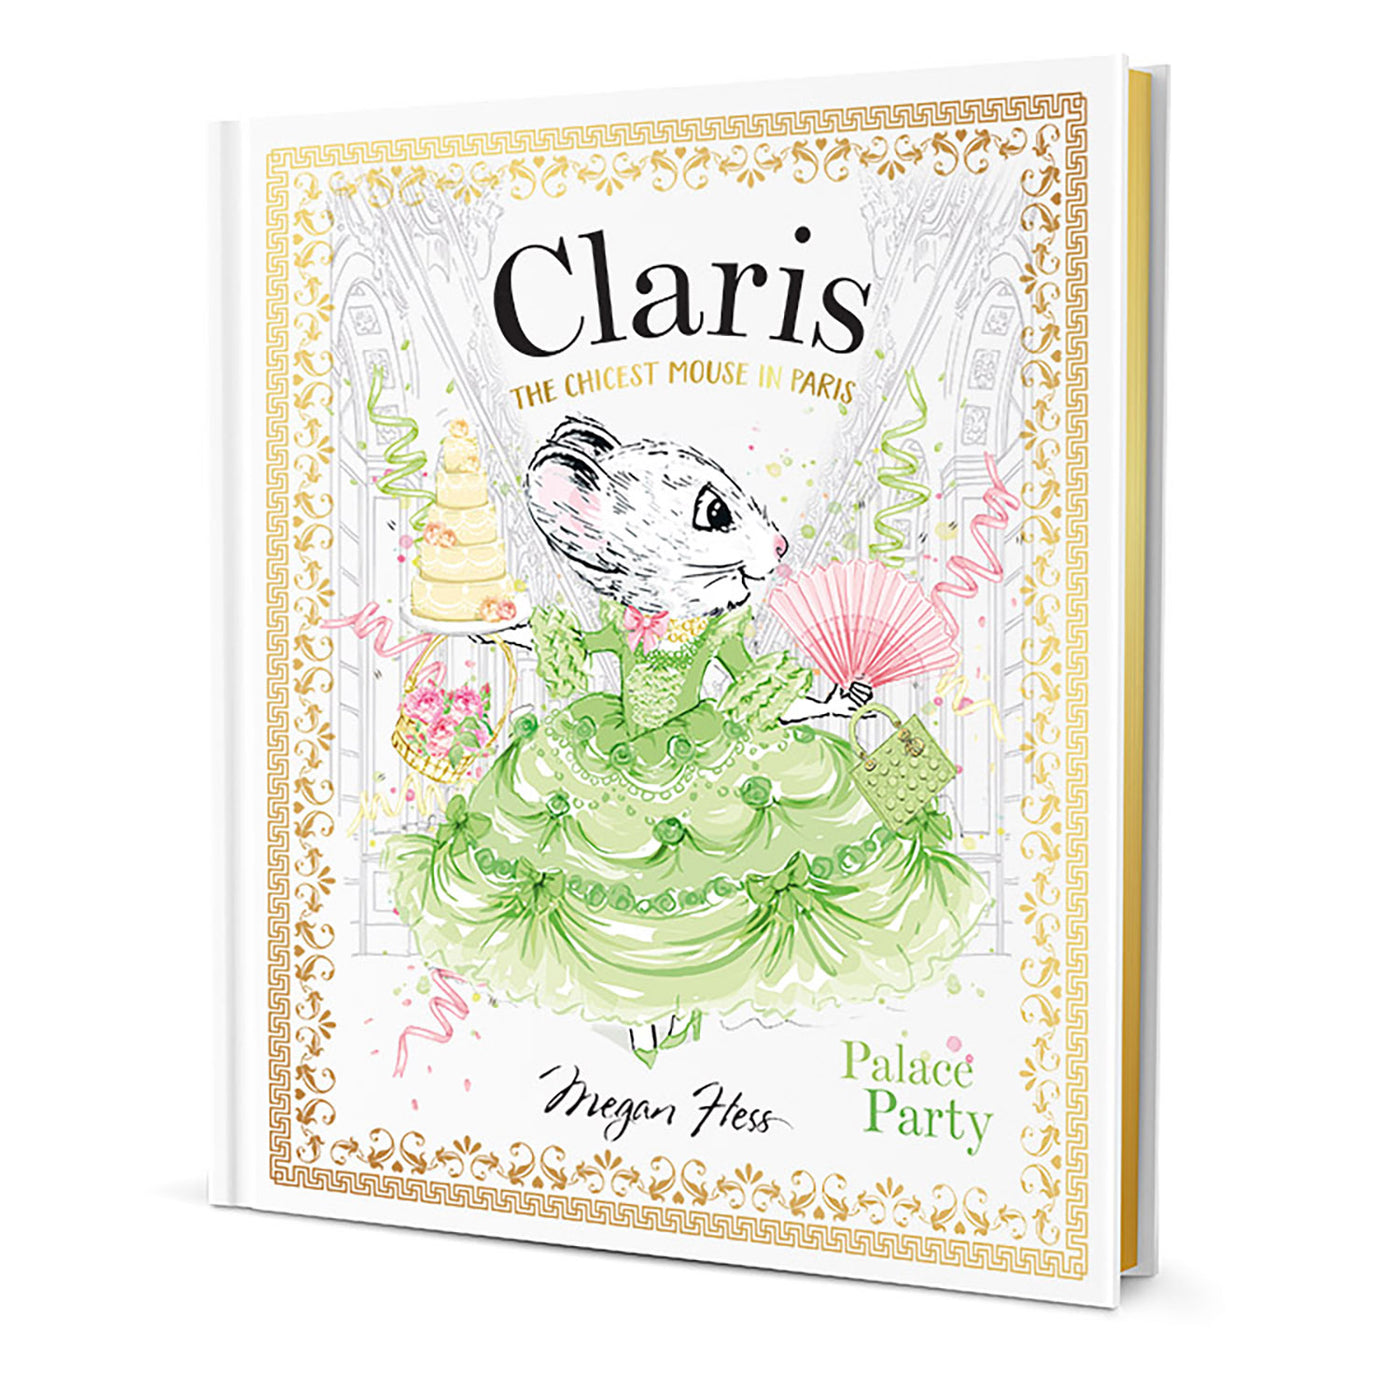 WEB_800_Claris-Palace-Party copy